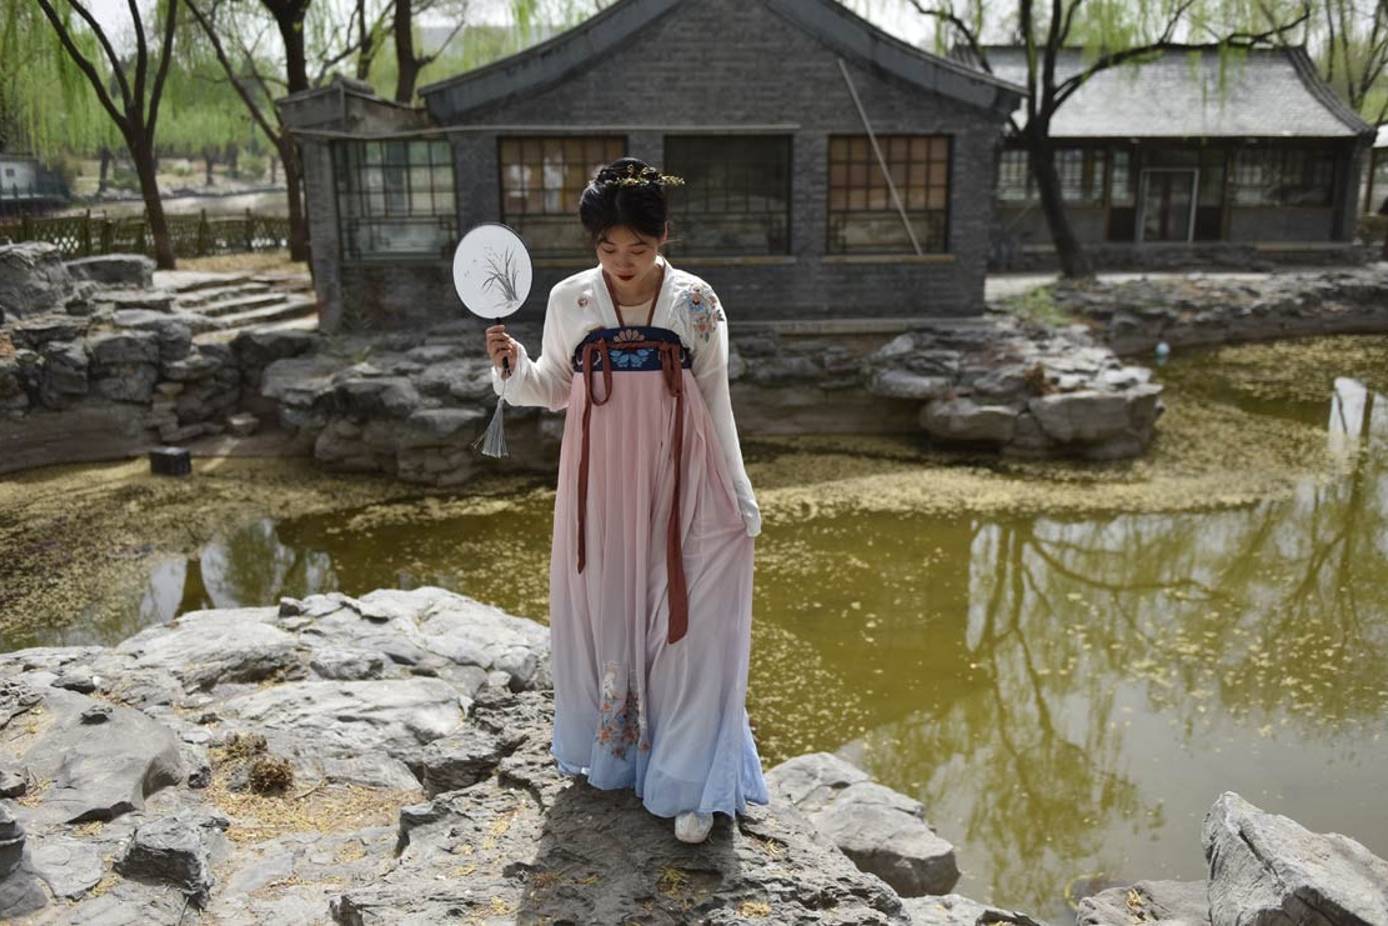 Traditional Chinese Female Hanfu Dress Female - Fashion Hanfu